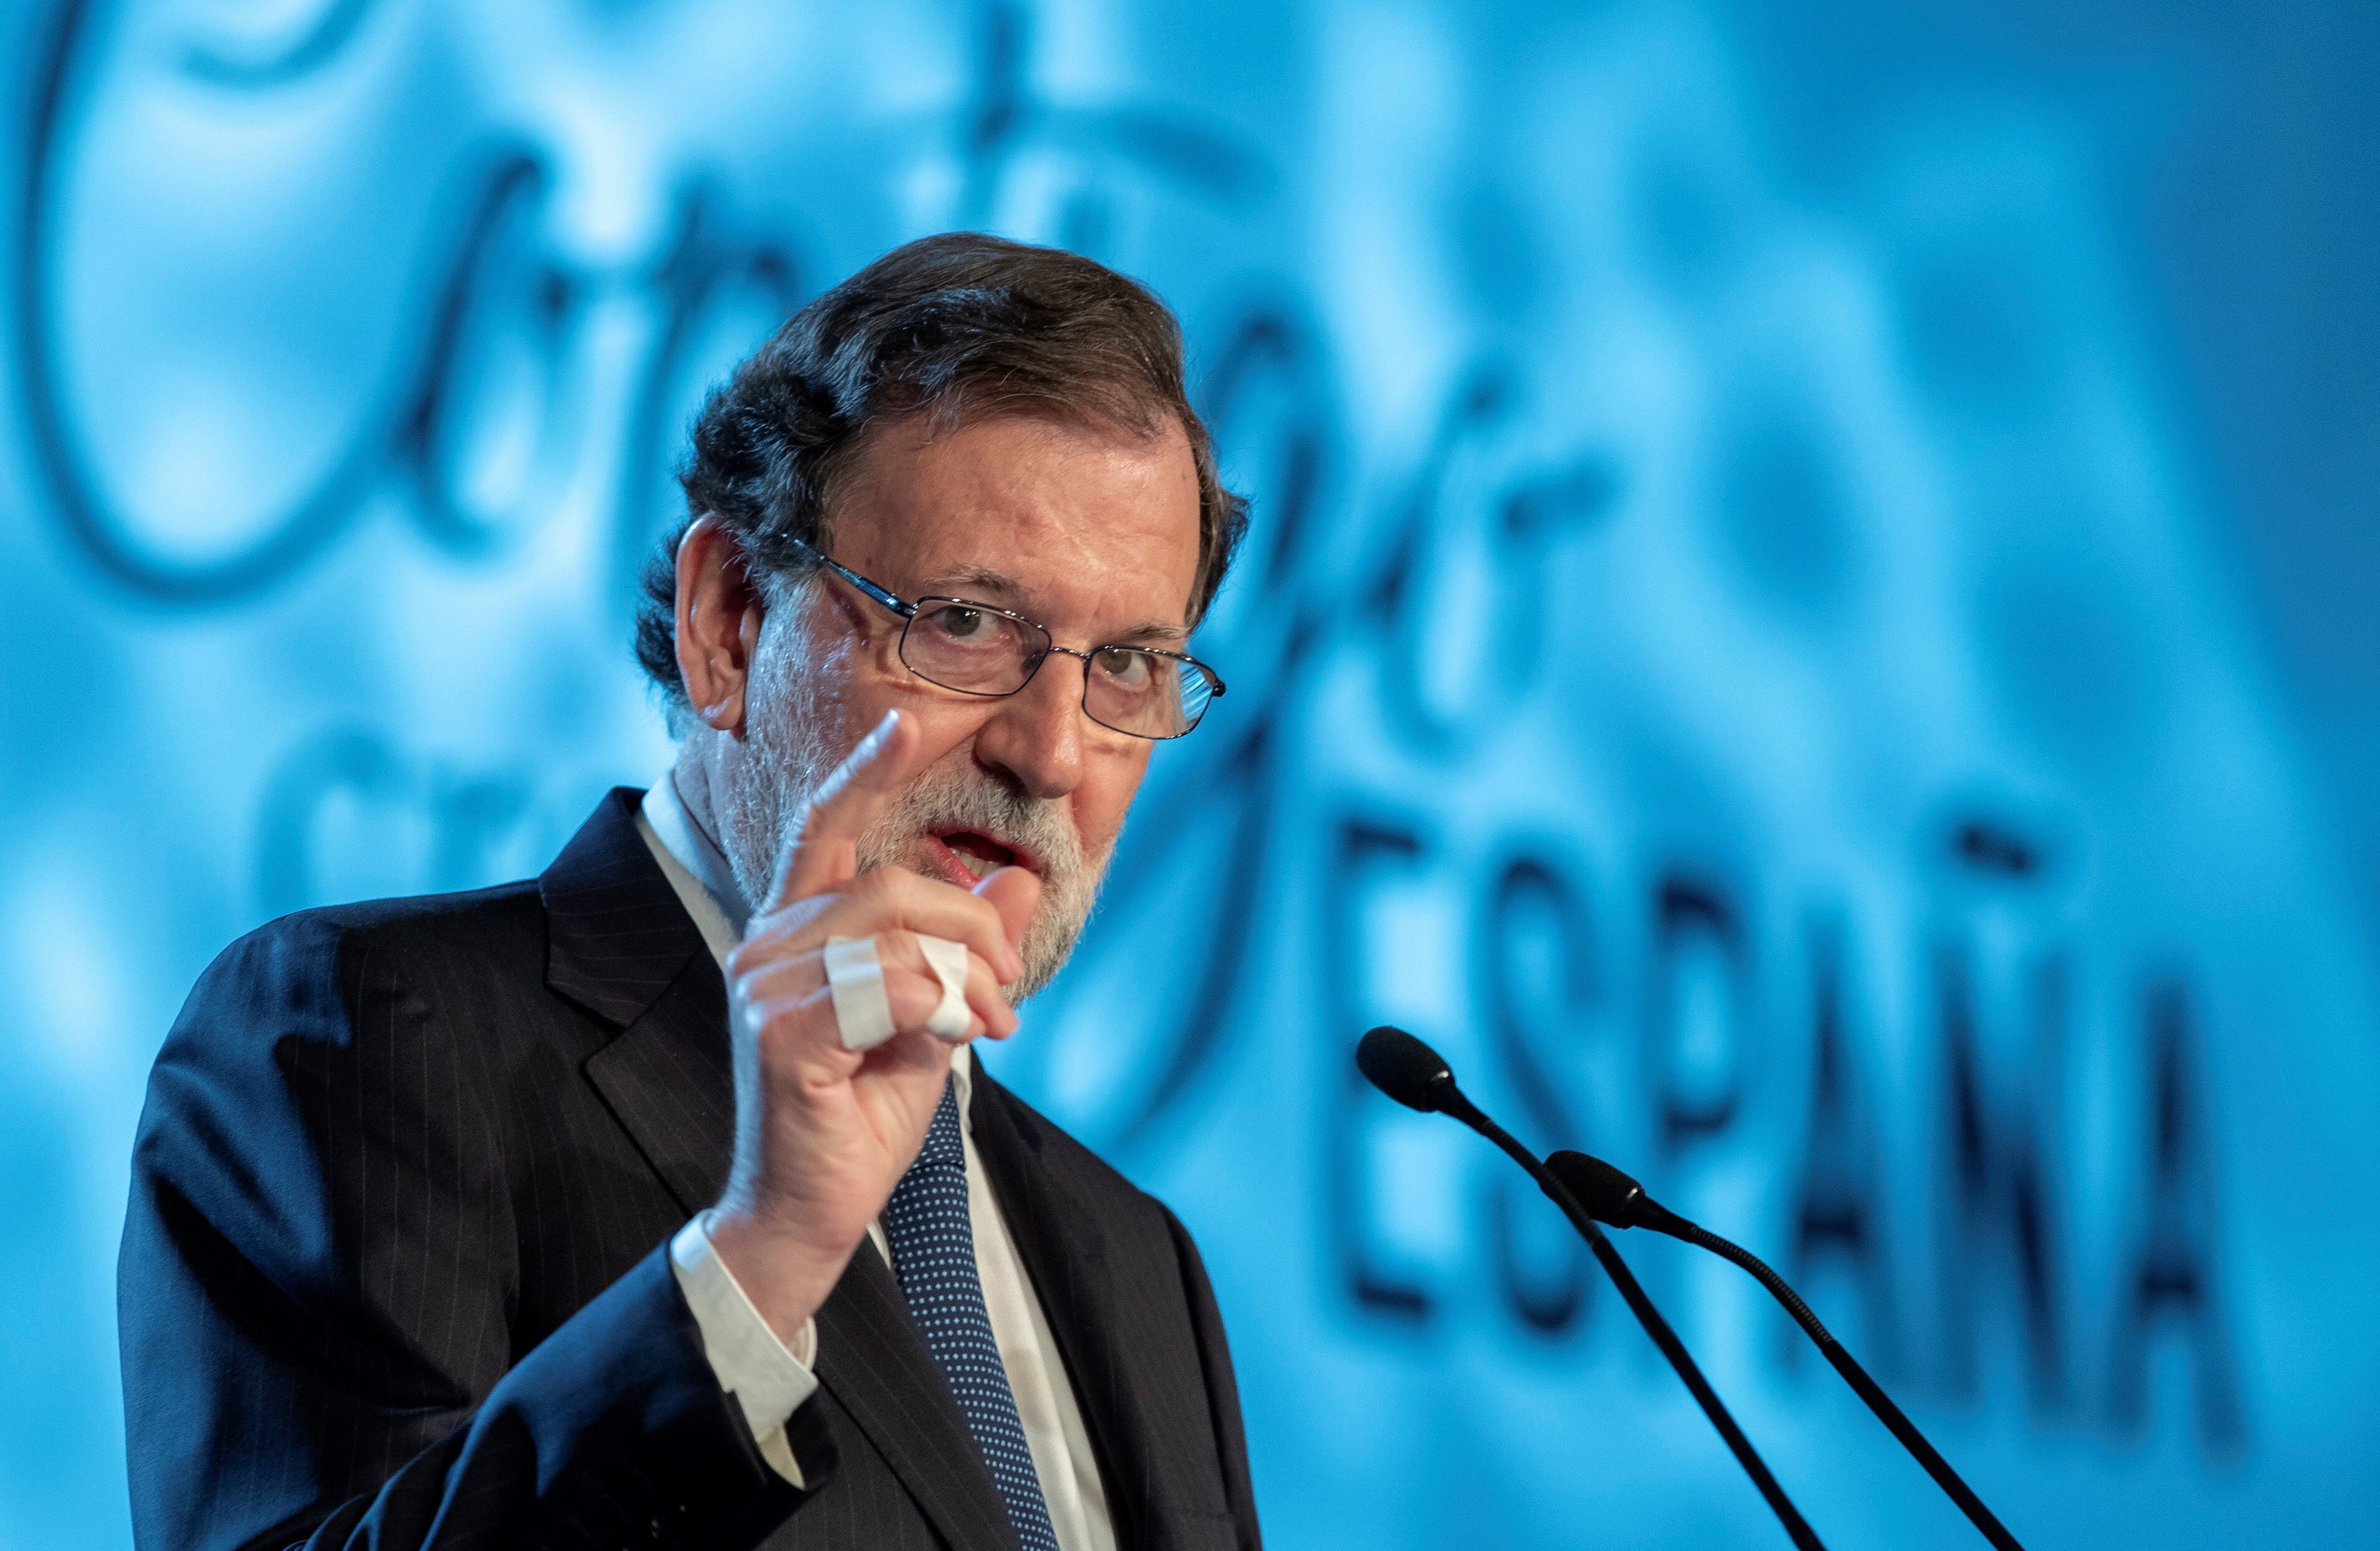 Rajoy warns Valencia not to take the same path as Catalonia